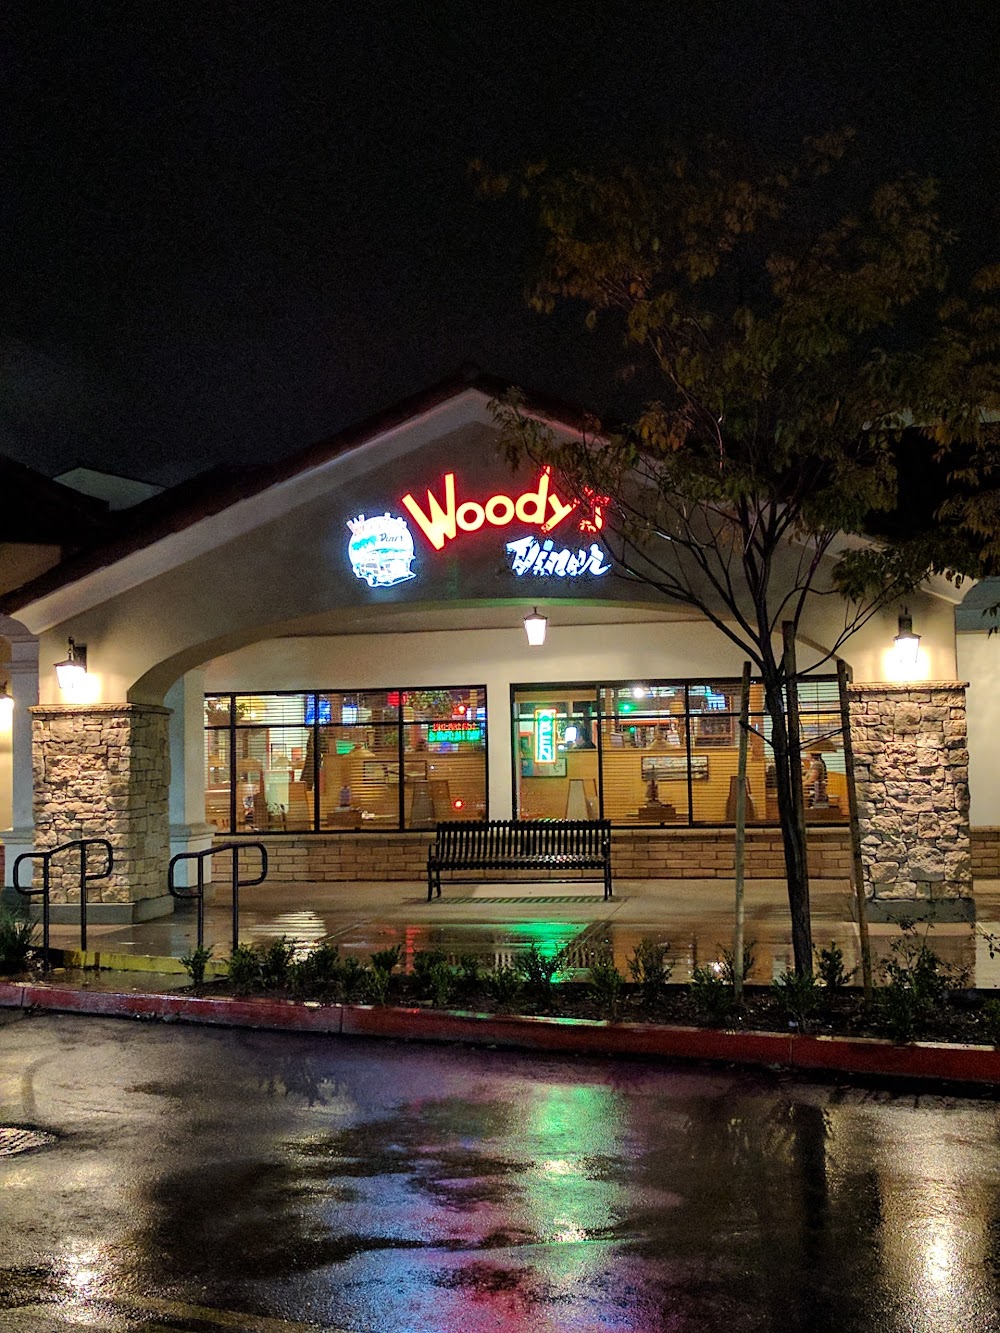 Woody’s Diner